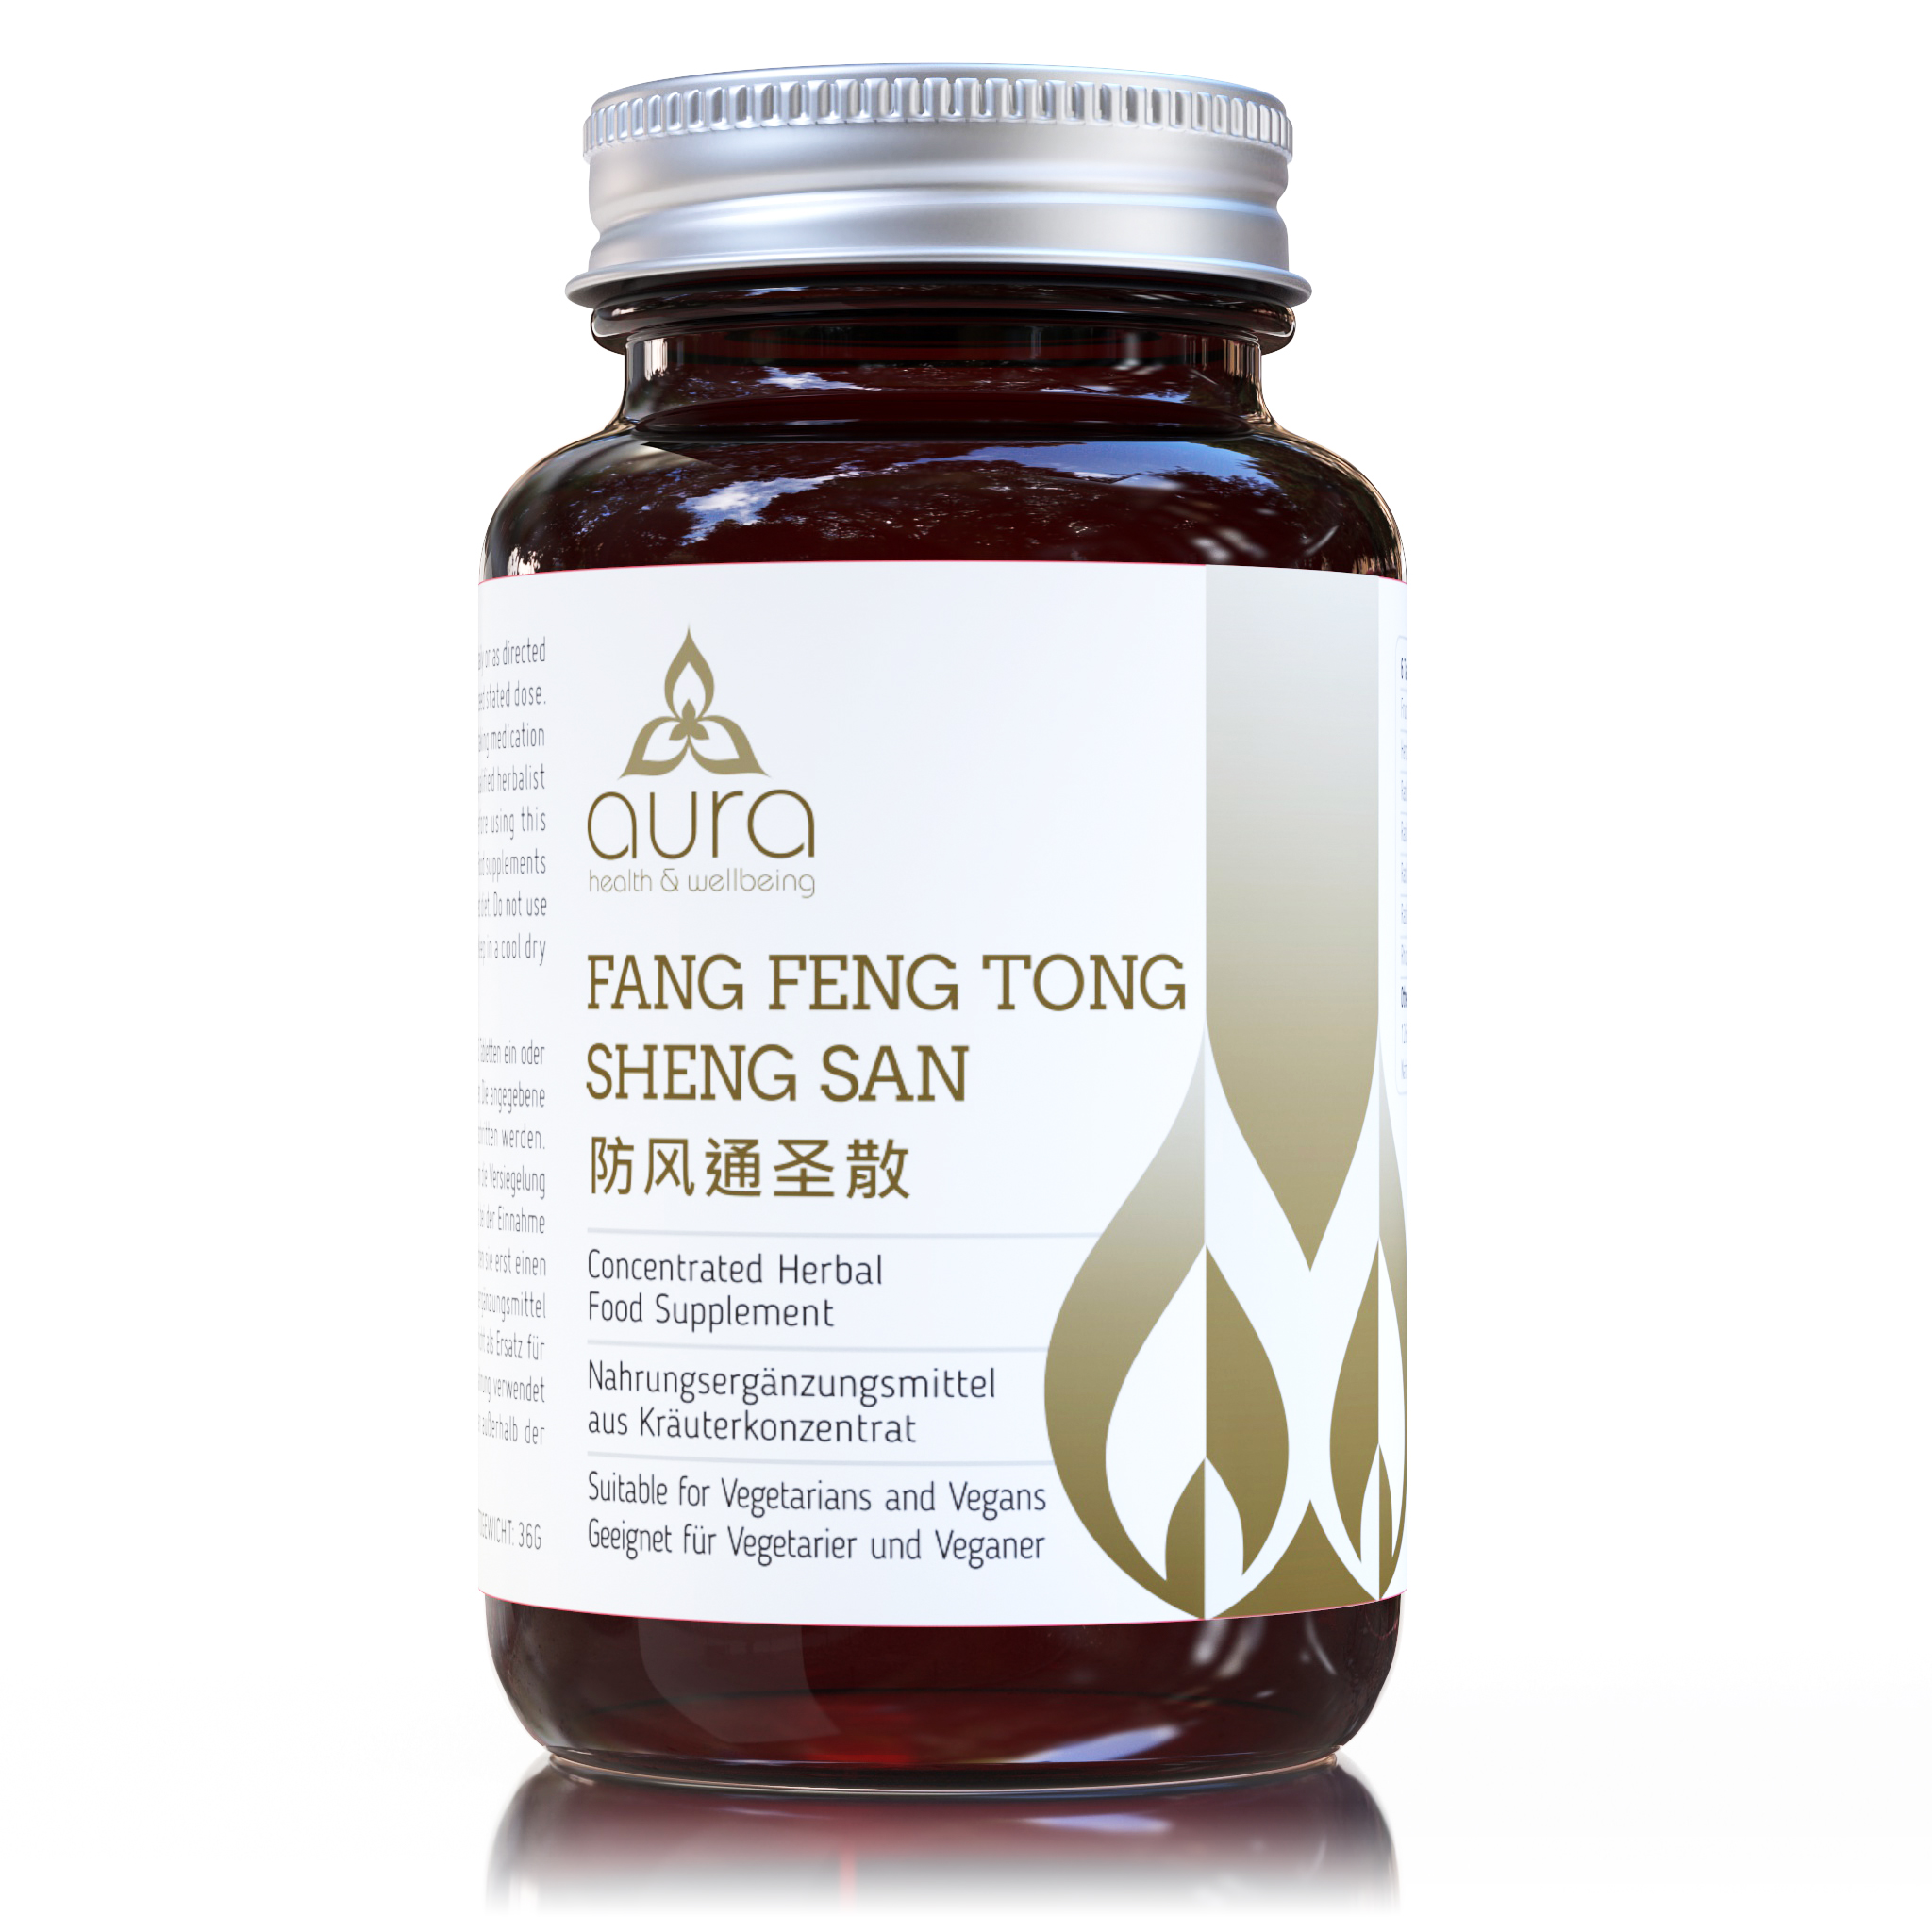 FANG FENG TONG SHENG SAN (tablets)